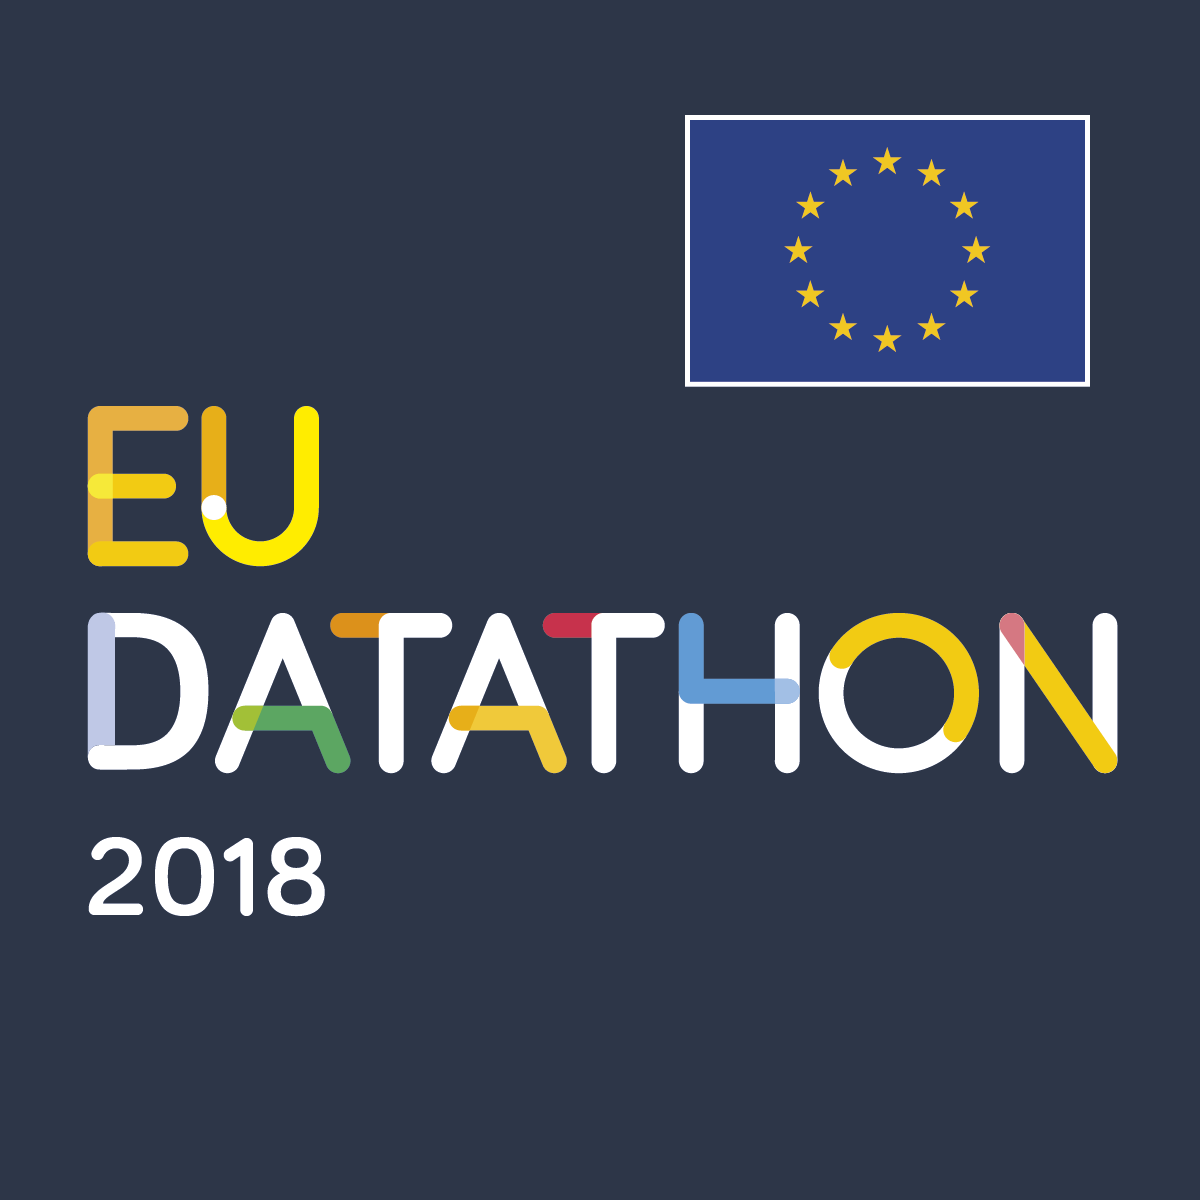 EU Datathon 2018 squared image black